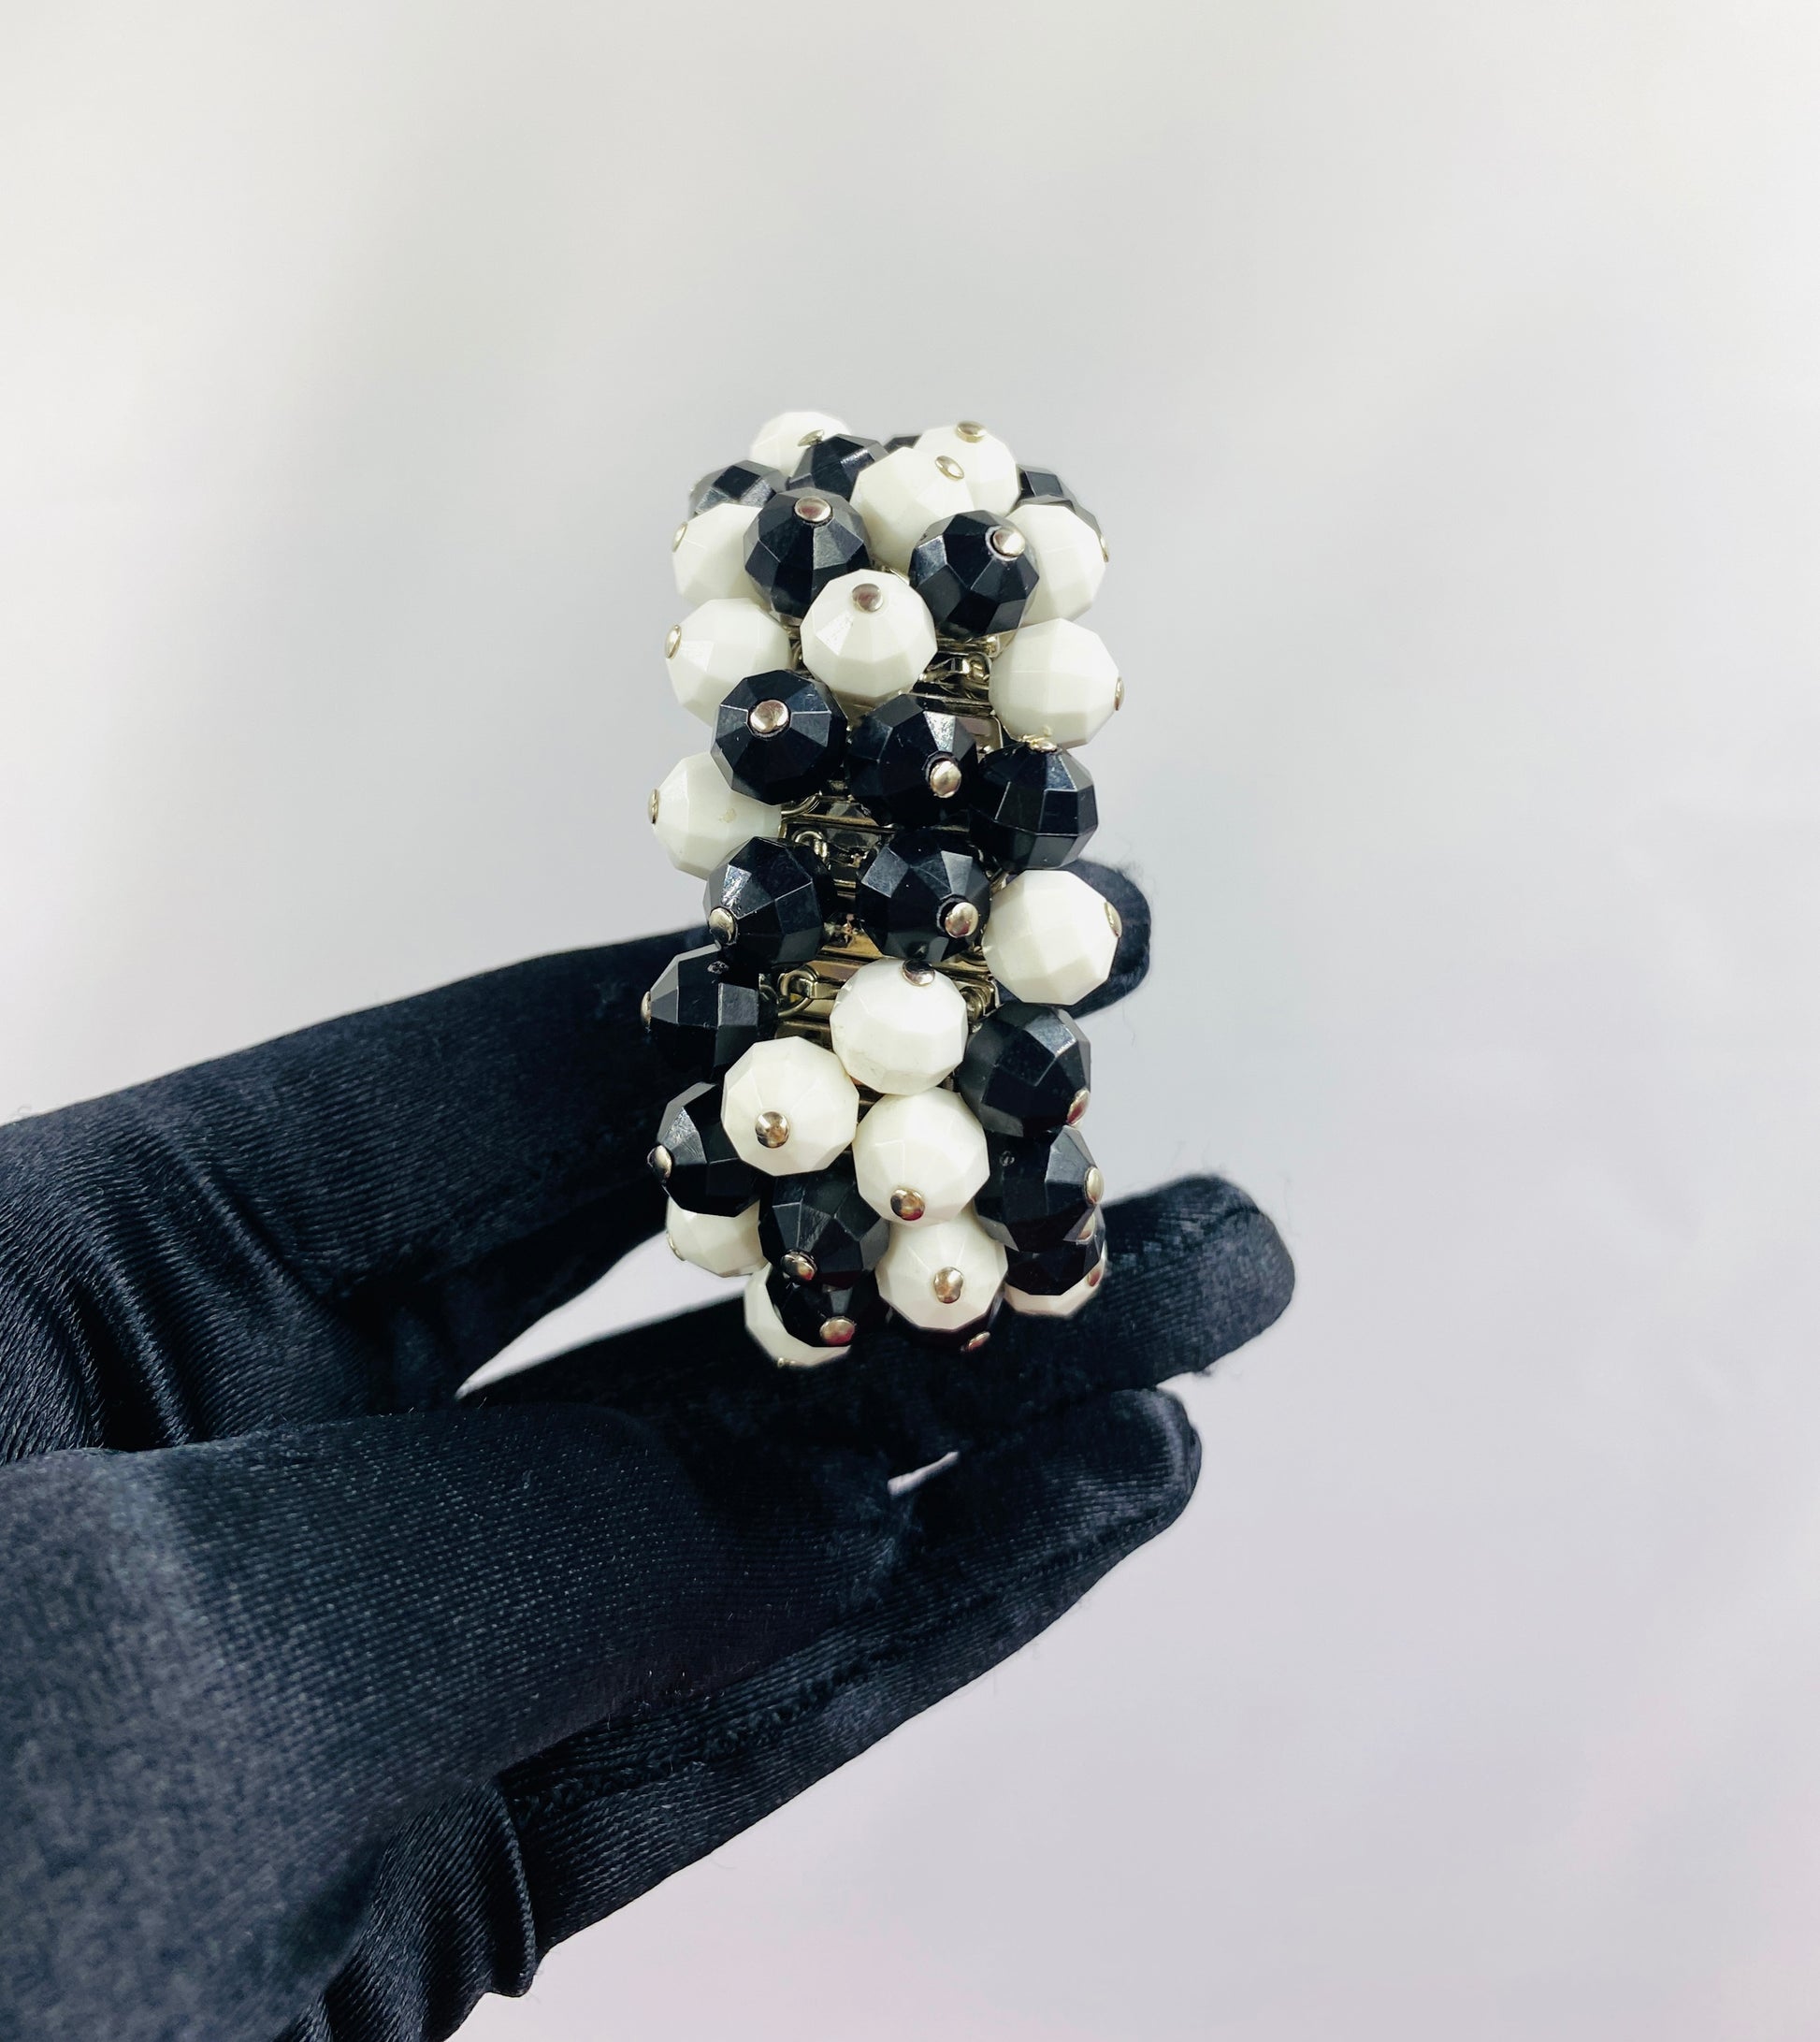 Vintage 1950s Black & White Glass Bead Cha Cha Expansion Bracelet